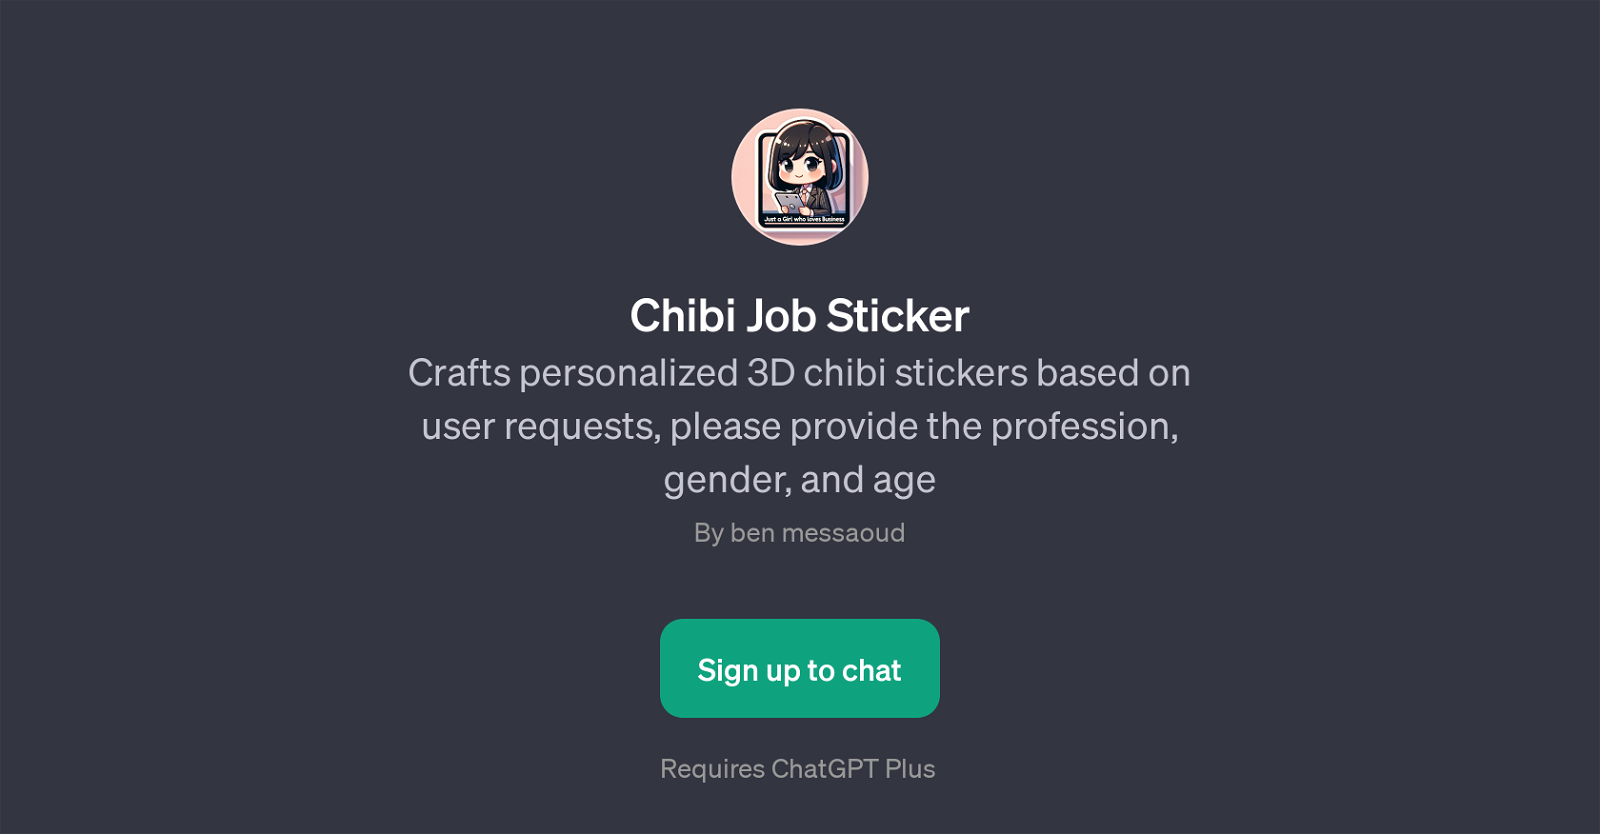 Chibi Job Sticker website